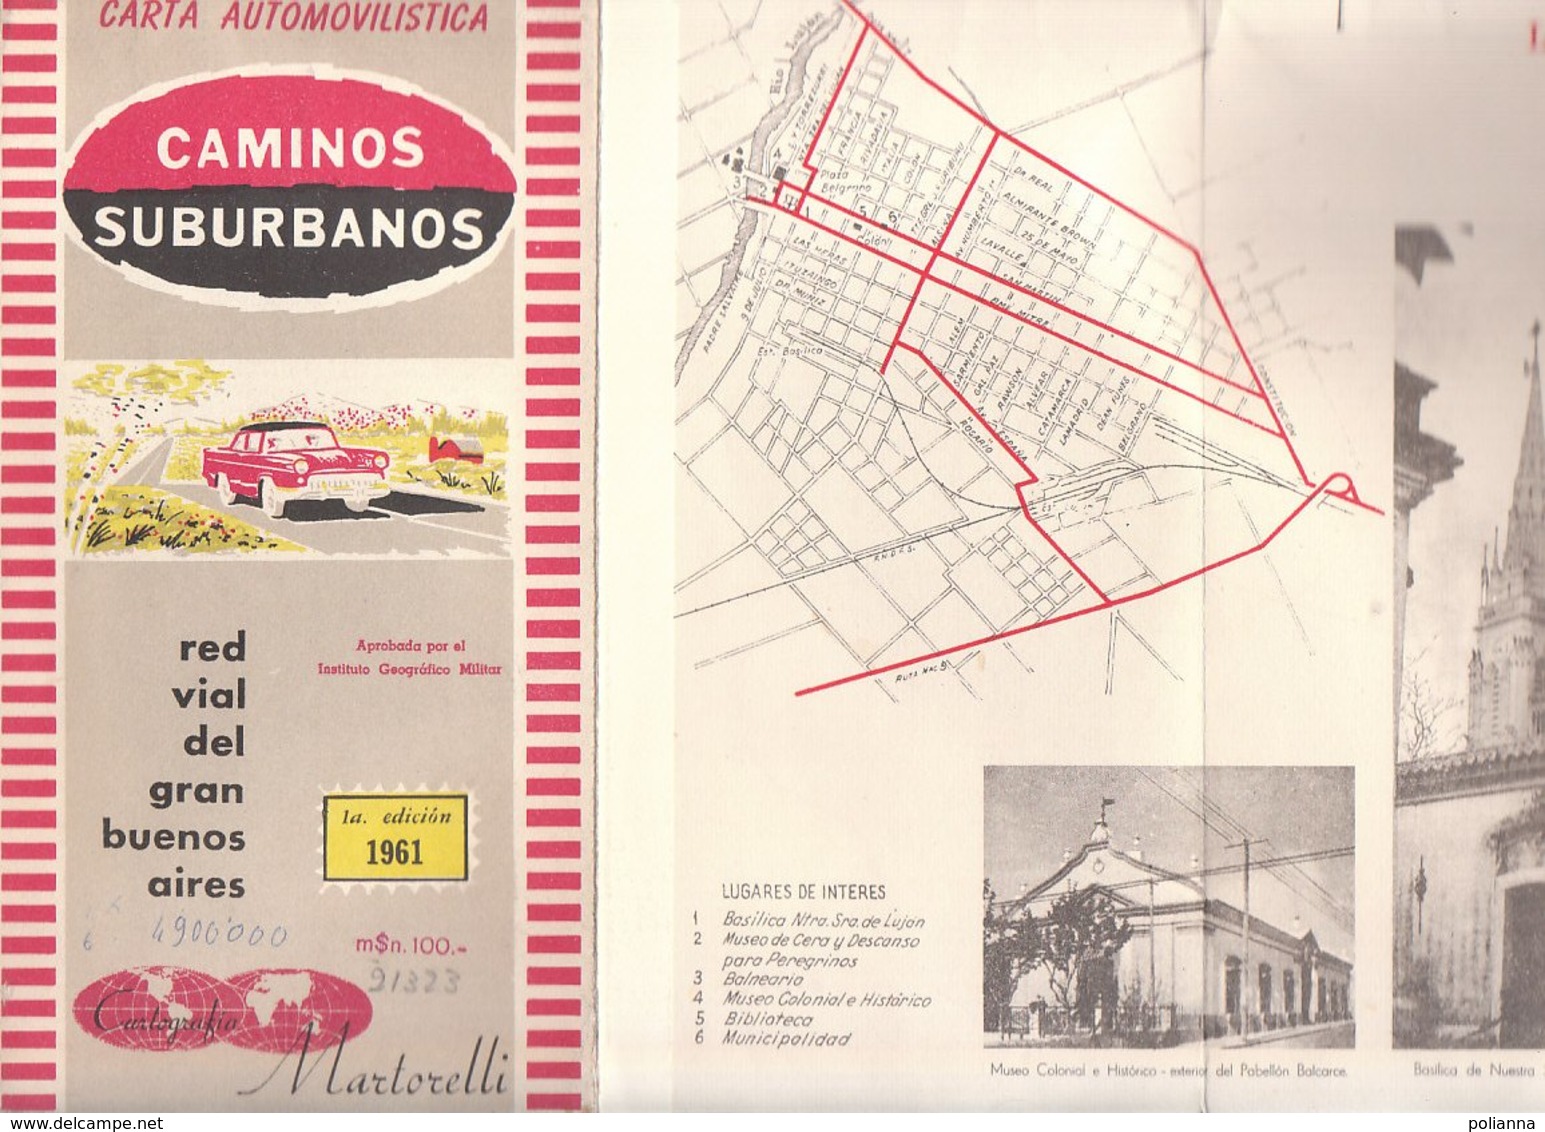 B1968 - MAP - CARTINA - CARTA AUTOMOBILISTICA RED VIAL DEL GRAN BUENOS AIRES Cartografia Martorelli 1961 - Carte Stradali